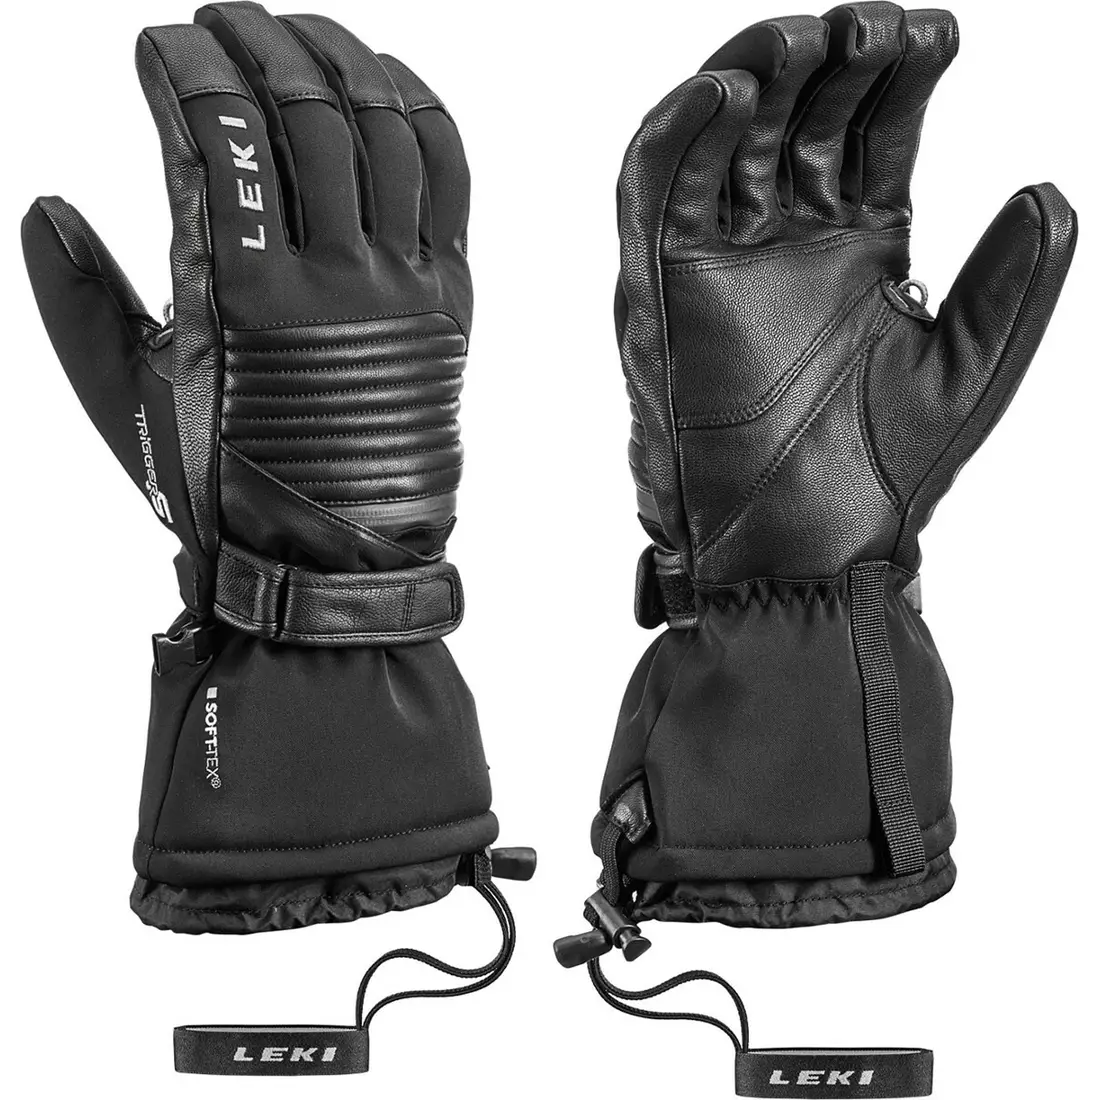 LEKI Ski gloves Xplore XT S black, 643840301110